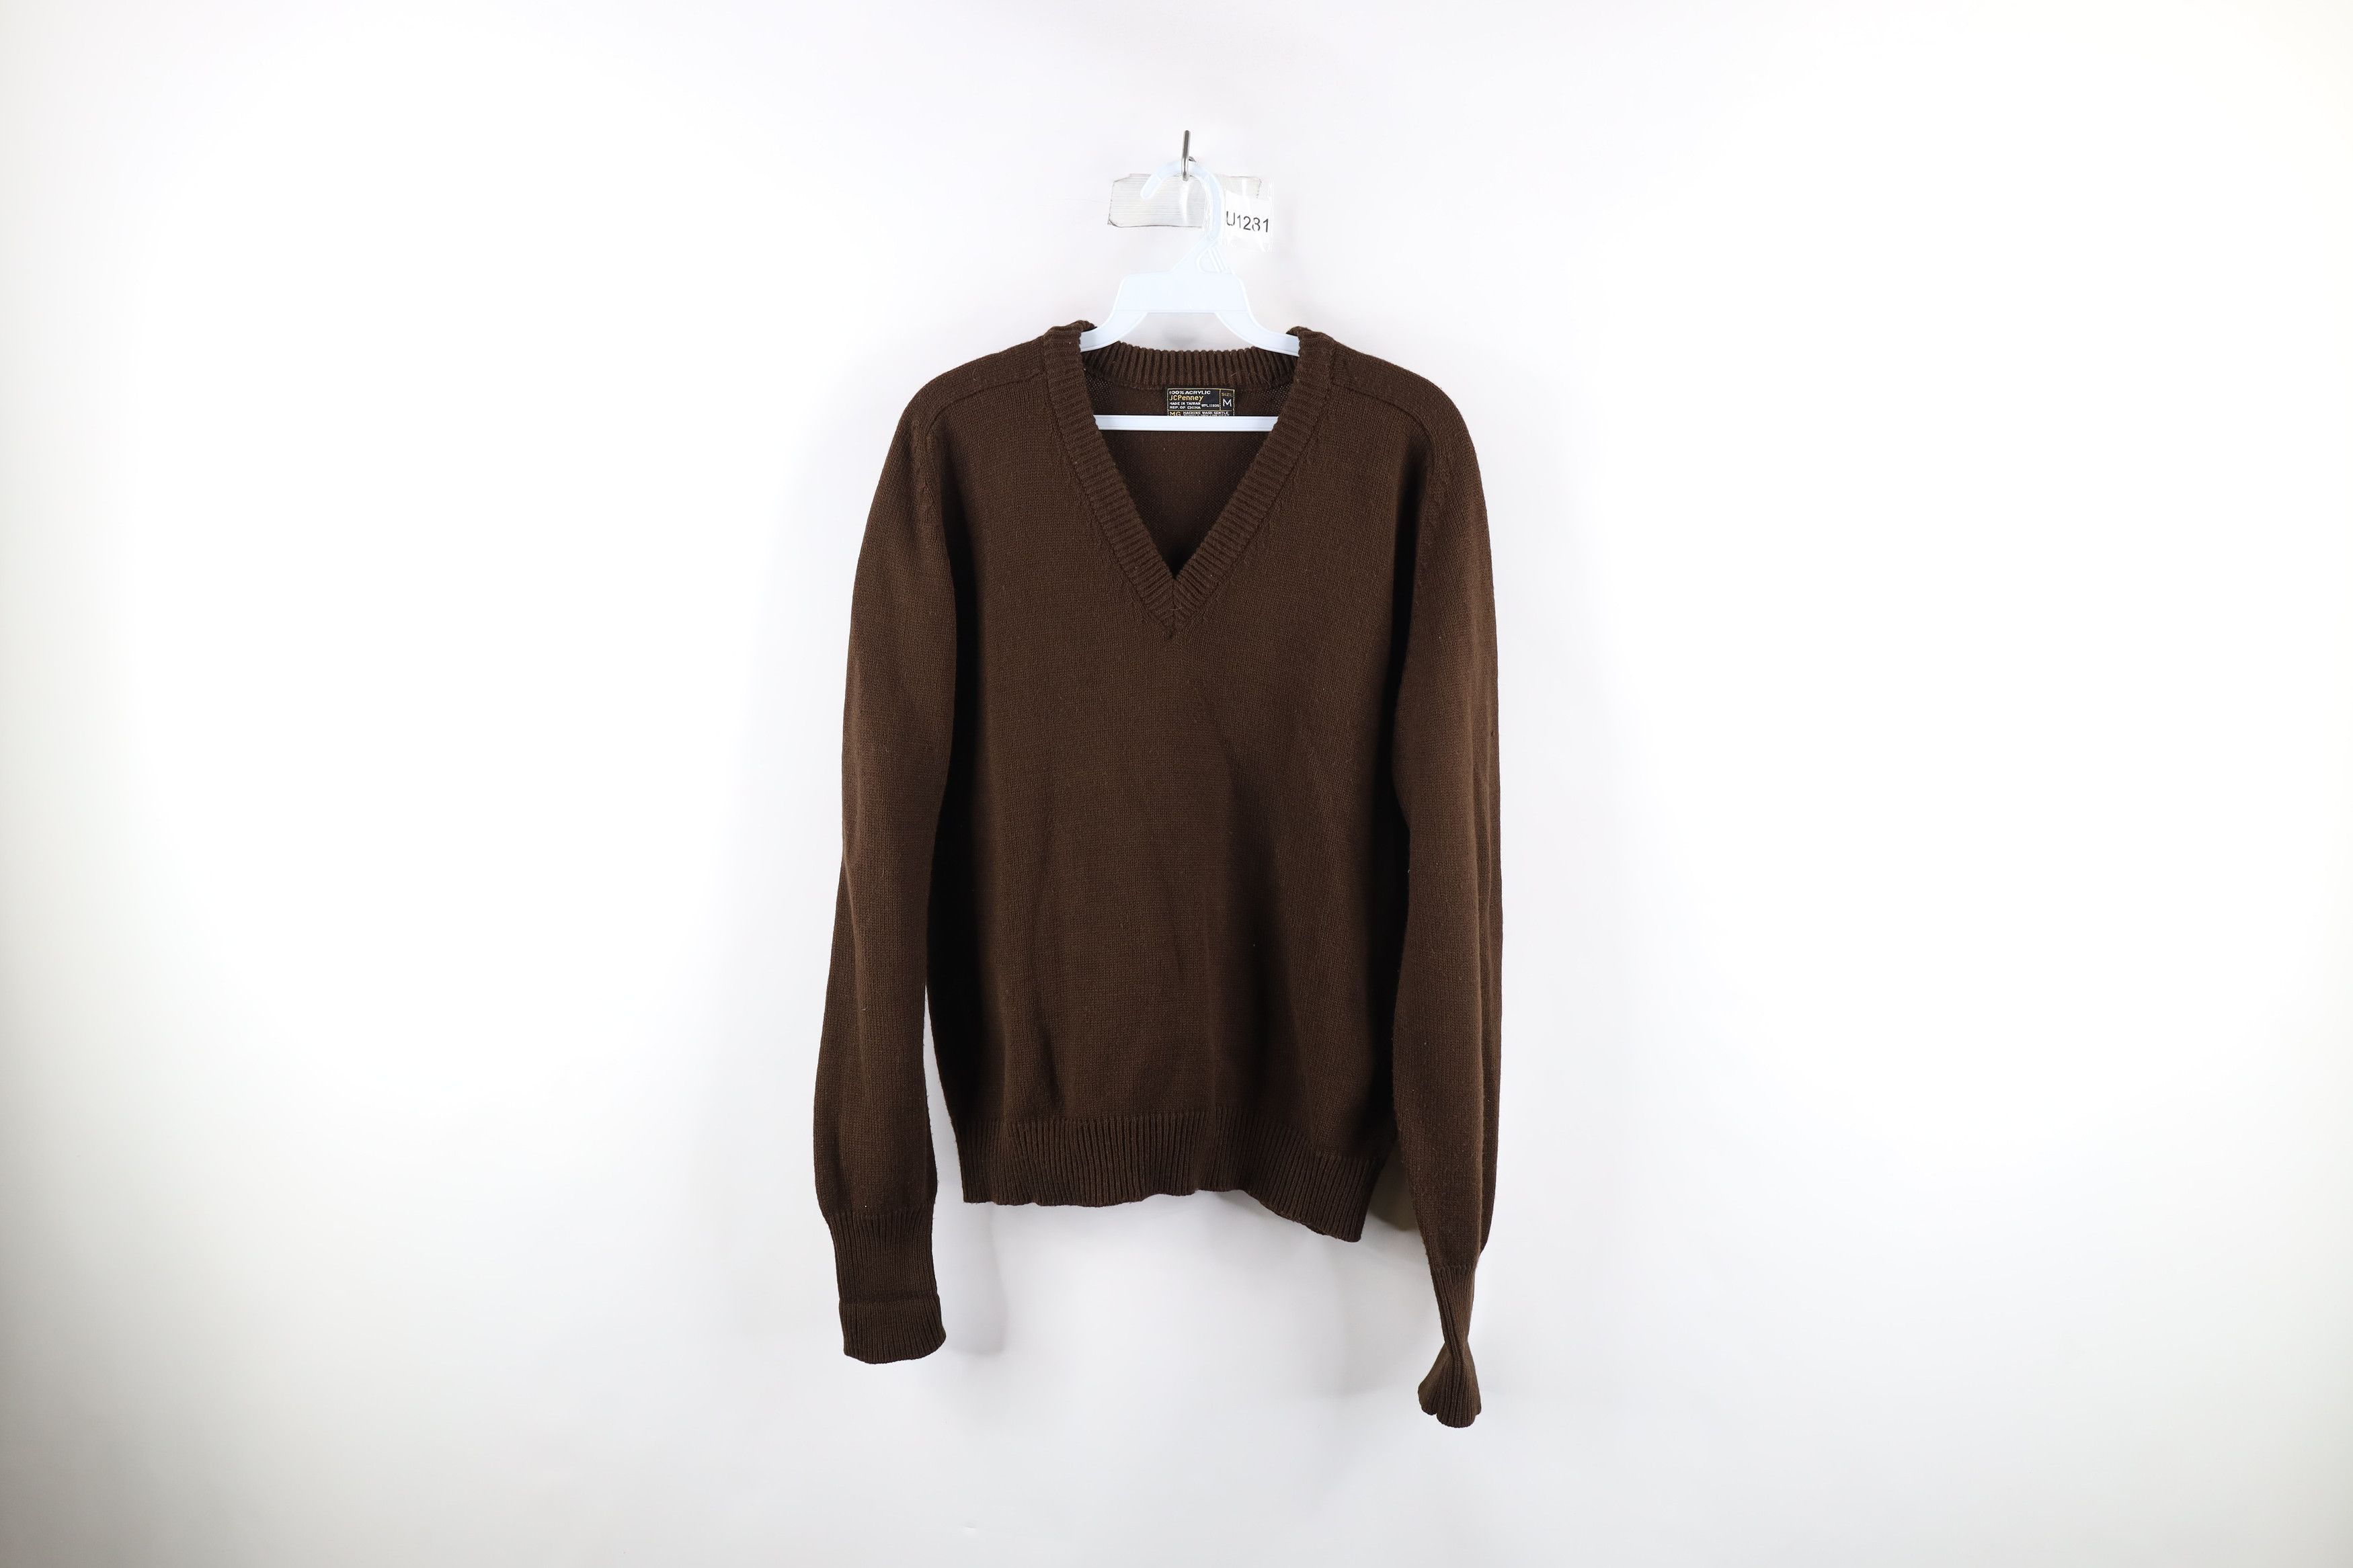 Vintage Vintage 70s Streetwear Blank Knit V-Neck Sweater Brown Size M / US 6-8 / IT 42-44 - 1 Preview